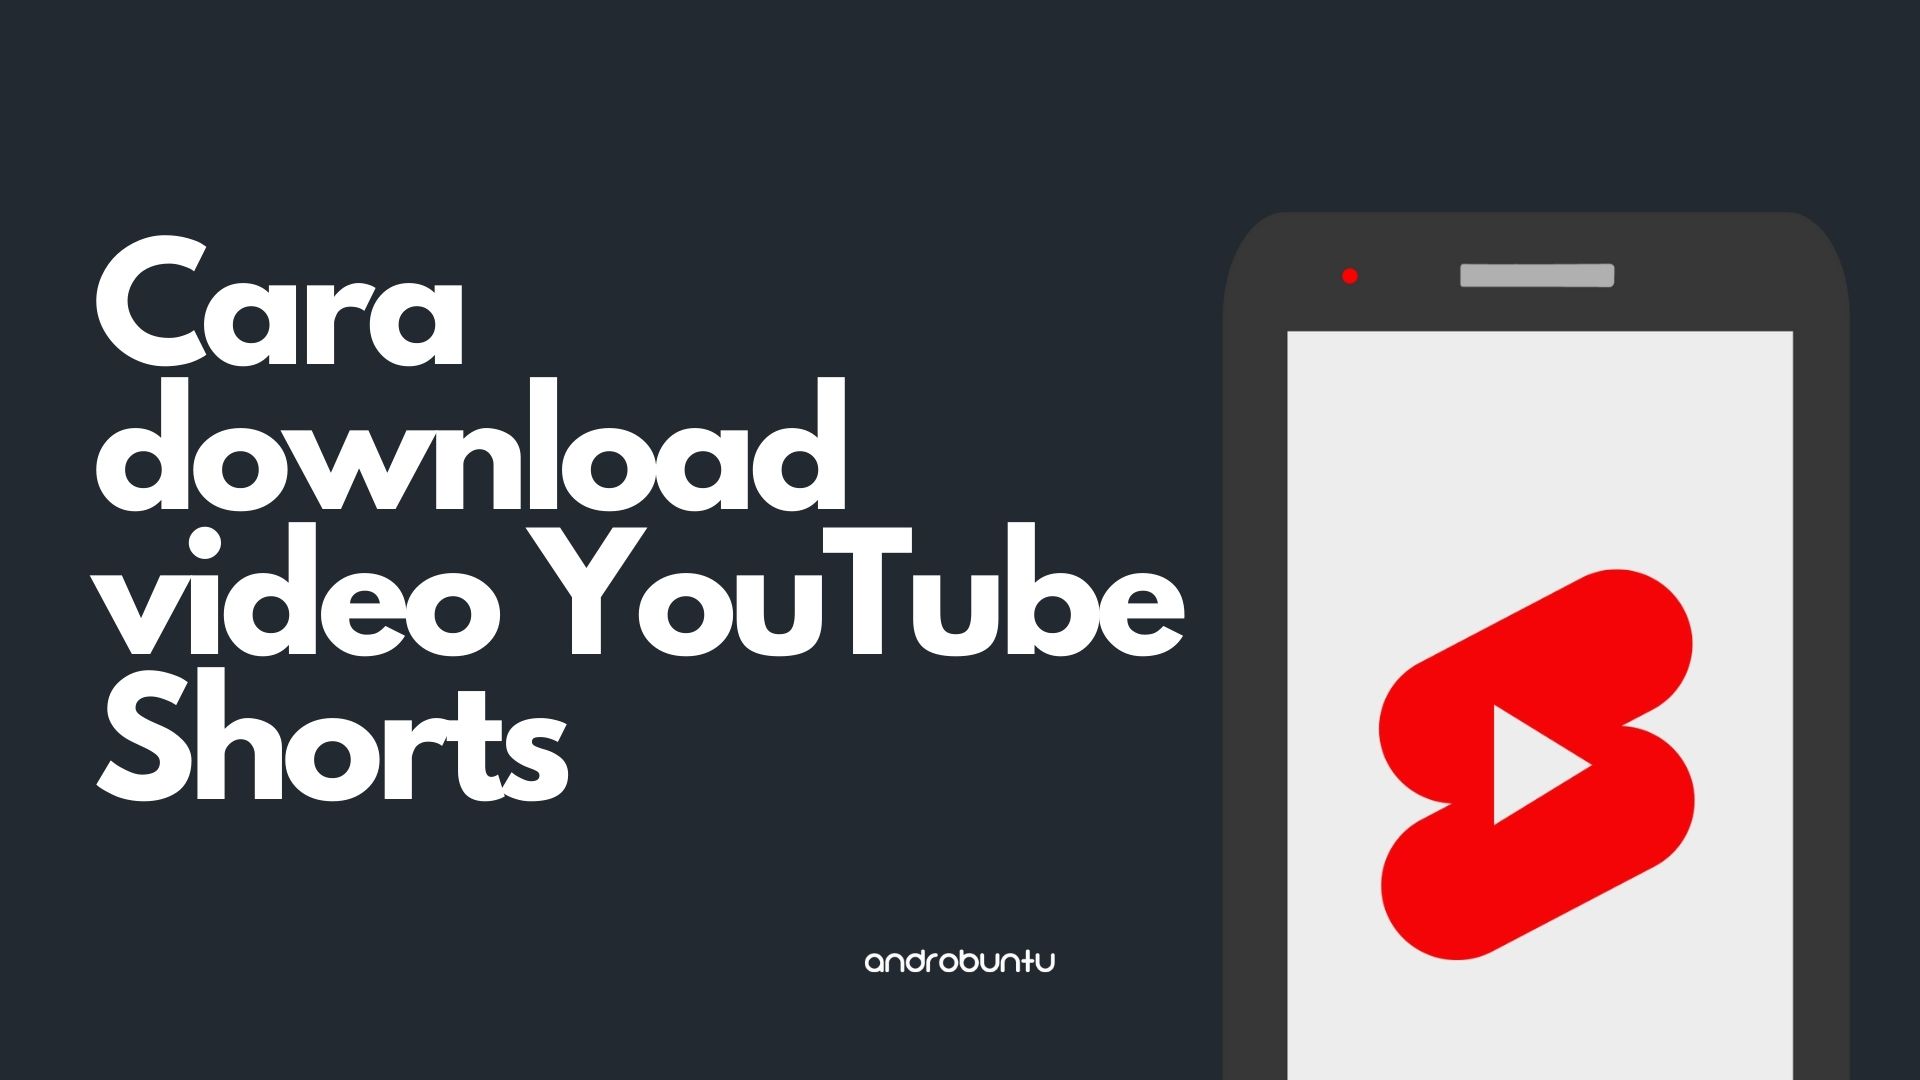 Cara Download Video YouTube Shorts by Androbuntu